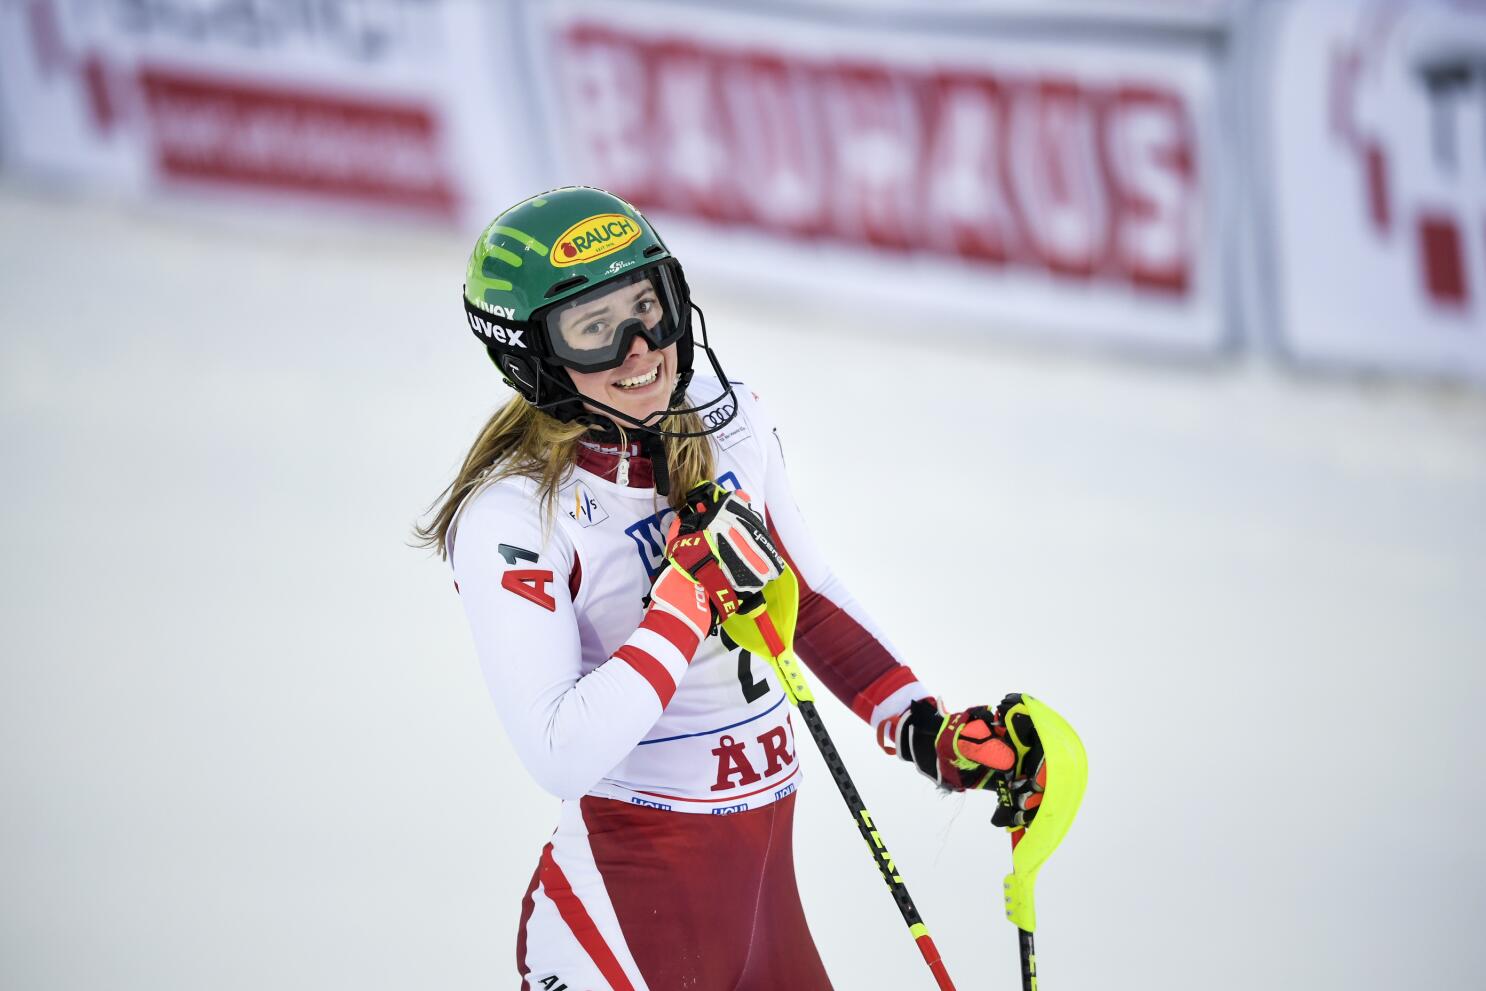 Liensberger ends Austrian 6-year wait for women's slalom win - The